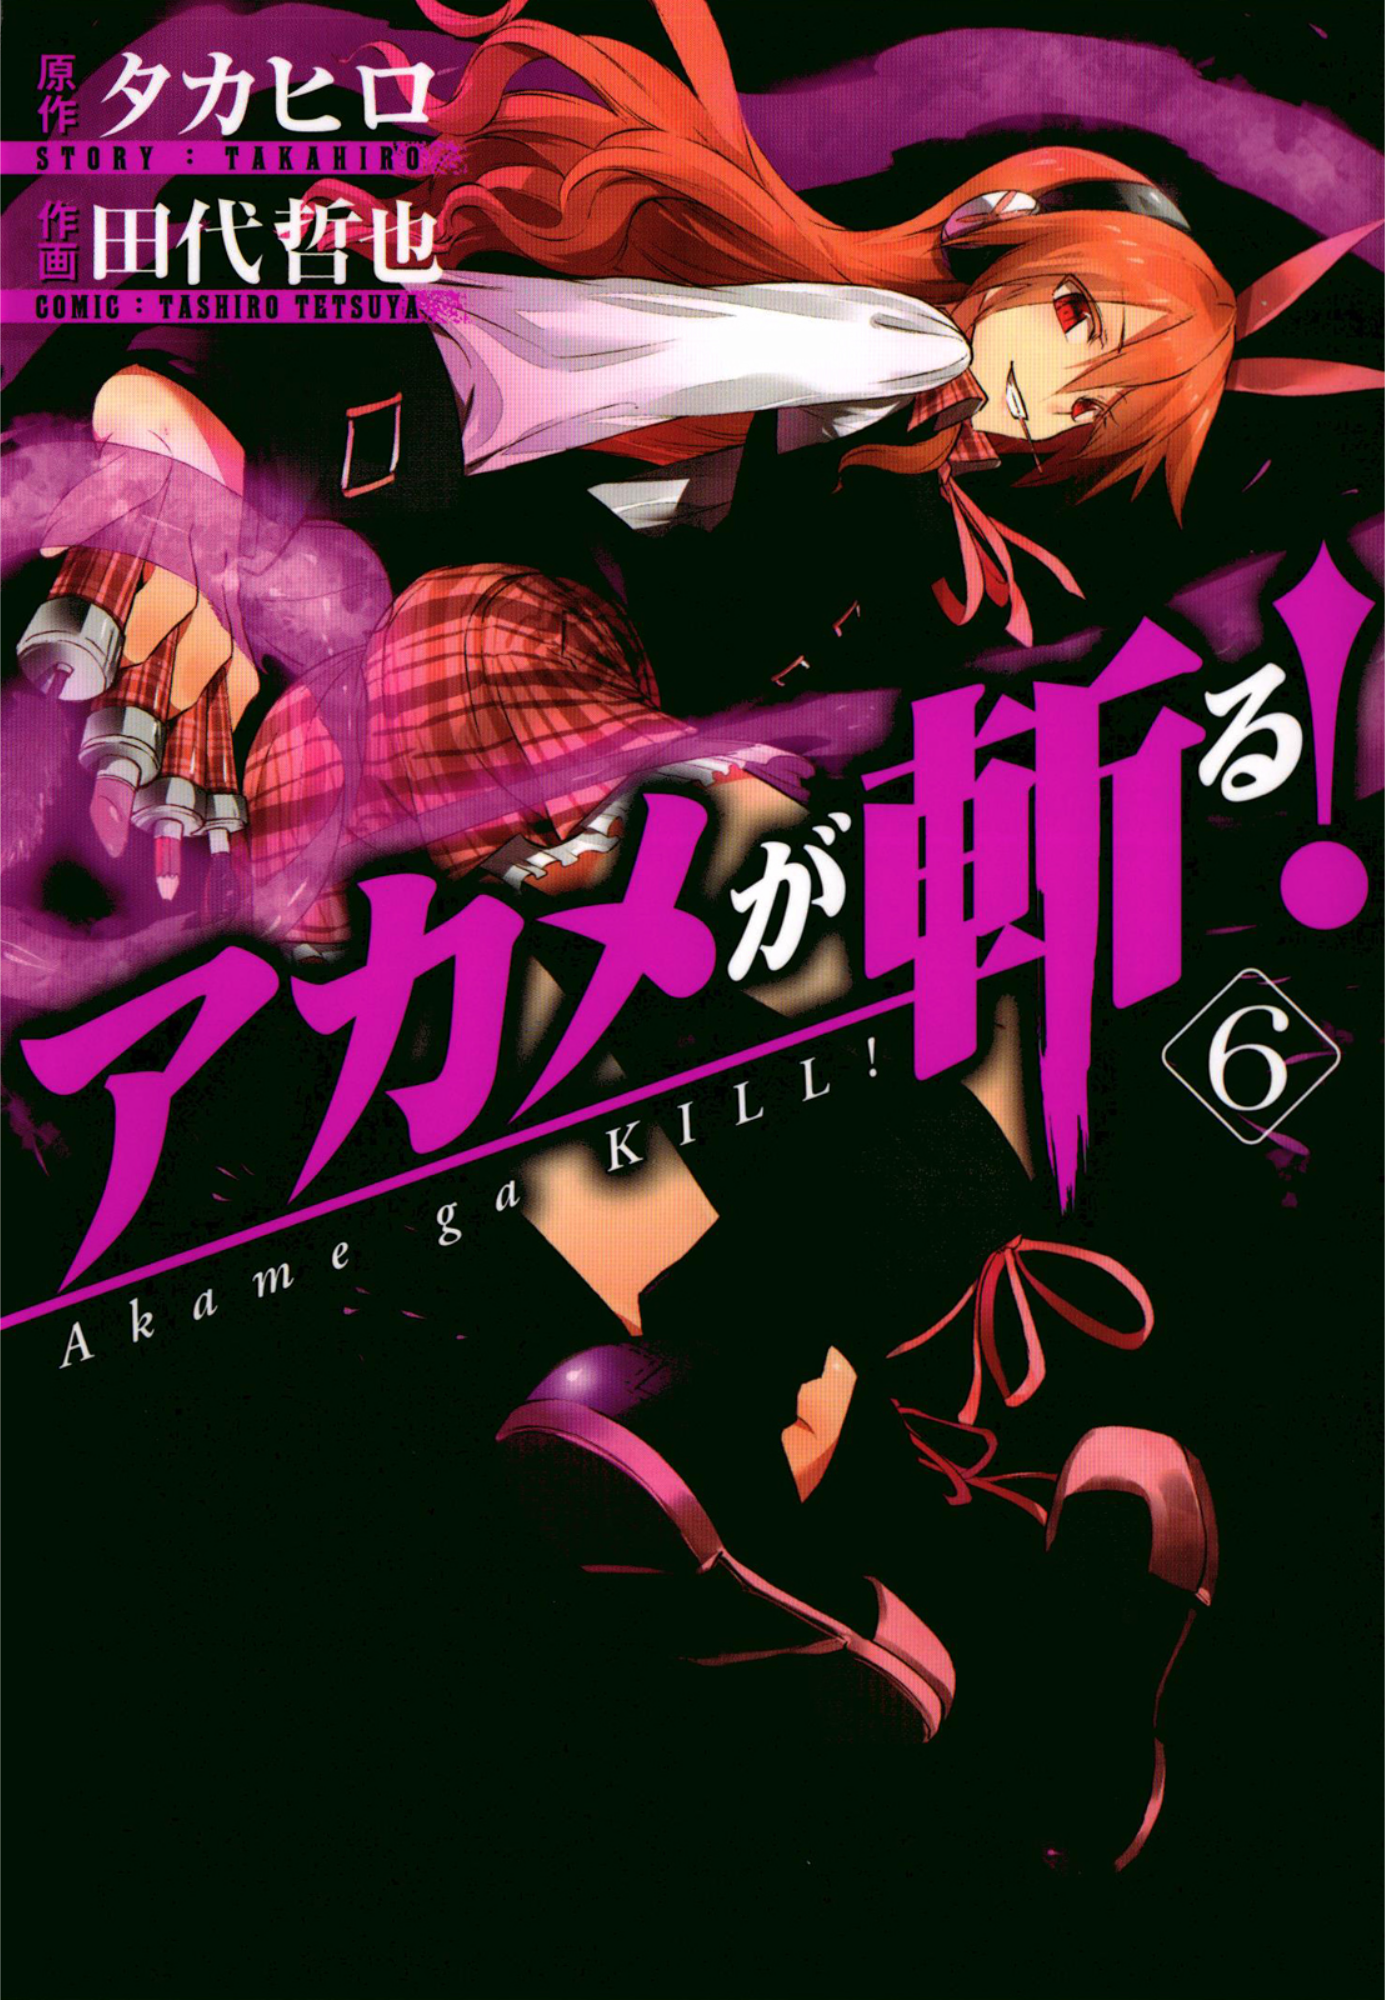 Category:Volume 10 (Zero), Akame Ga Kill! Wiki